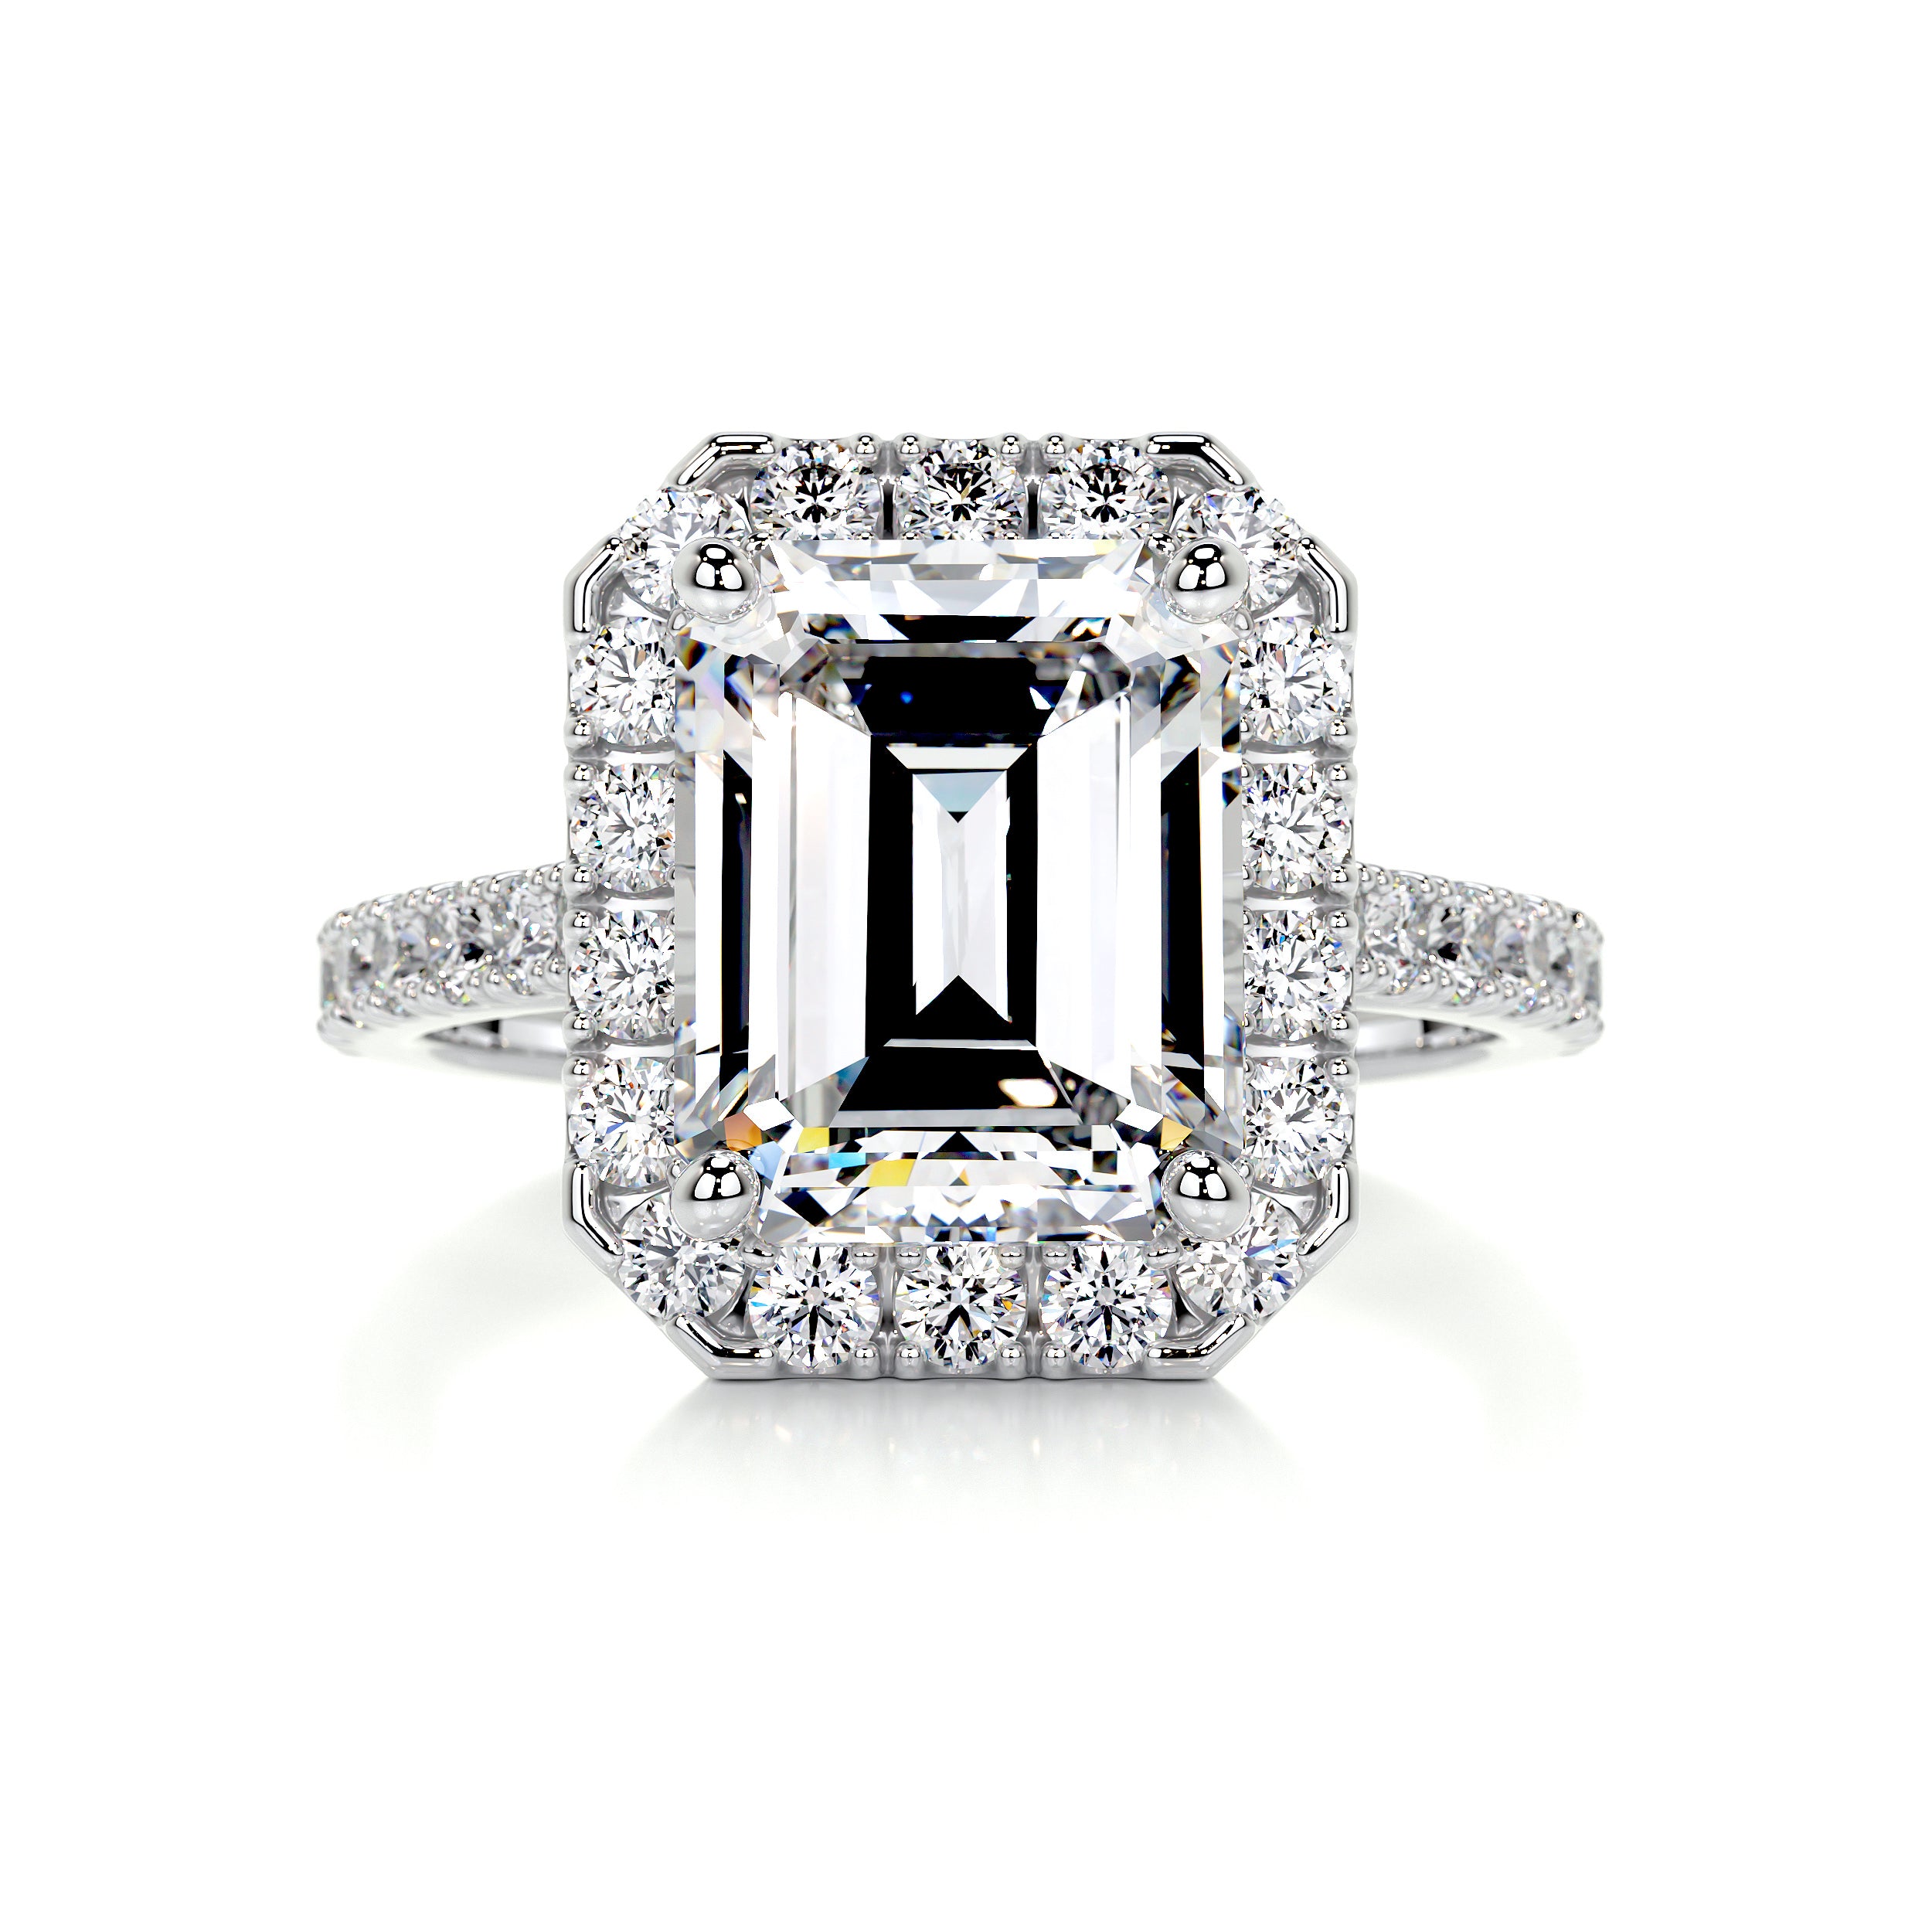 Zoey Diamond Engagement Ring   (2 Carat) -18K White Gold